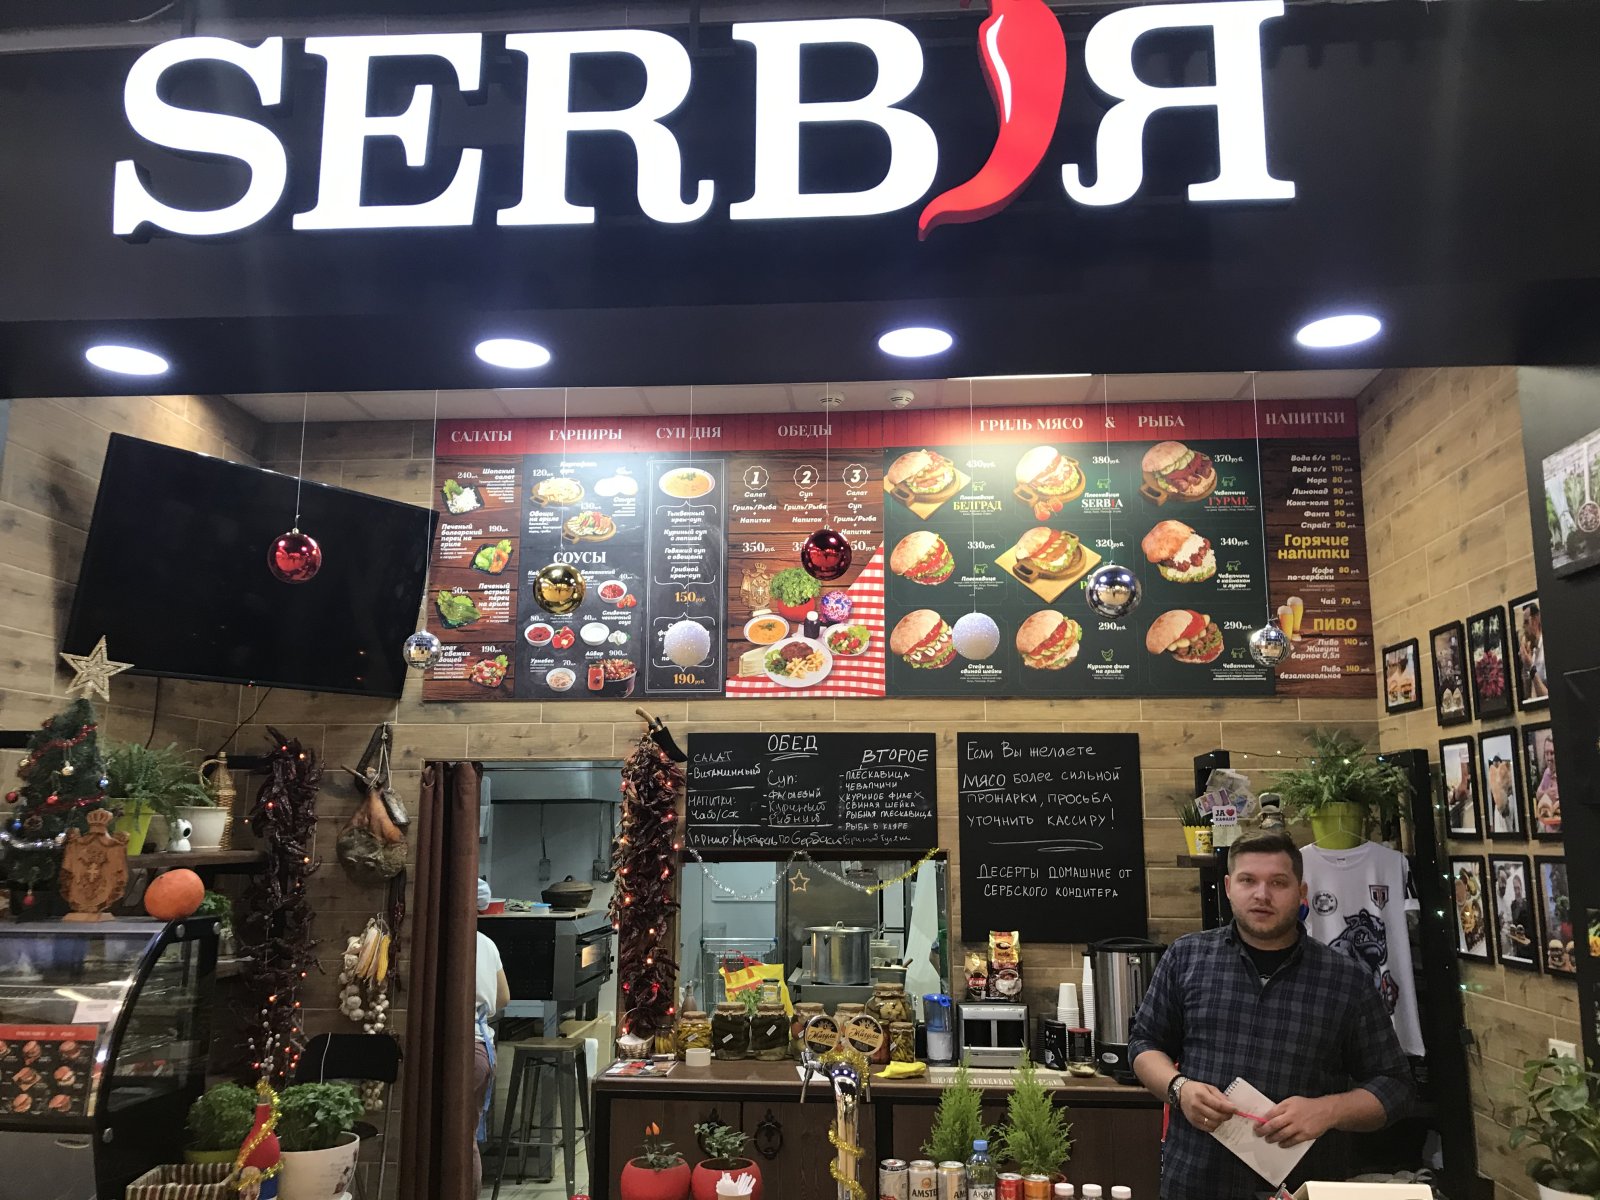 Serbiя, ресторан, Ленинградский проспект, 36, 1 этаж